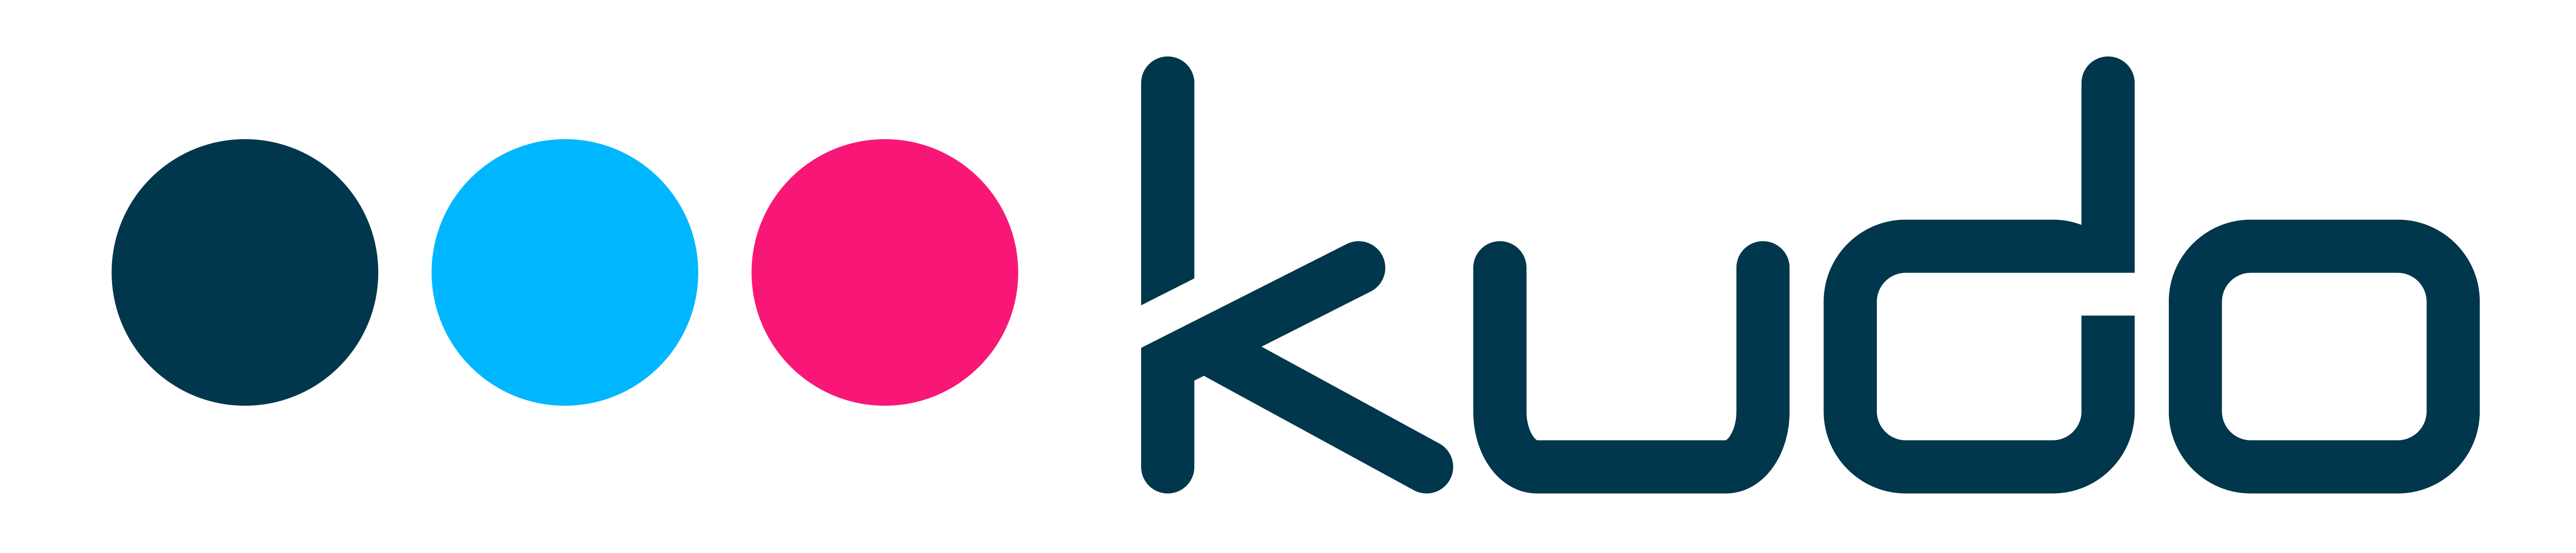 kudo-new-logo-dark